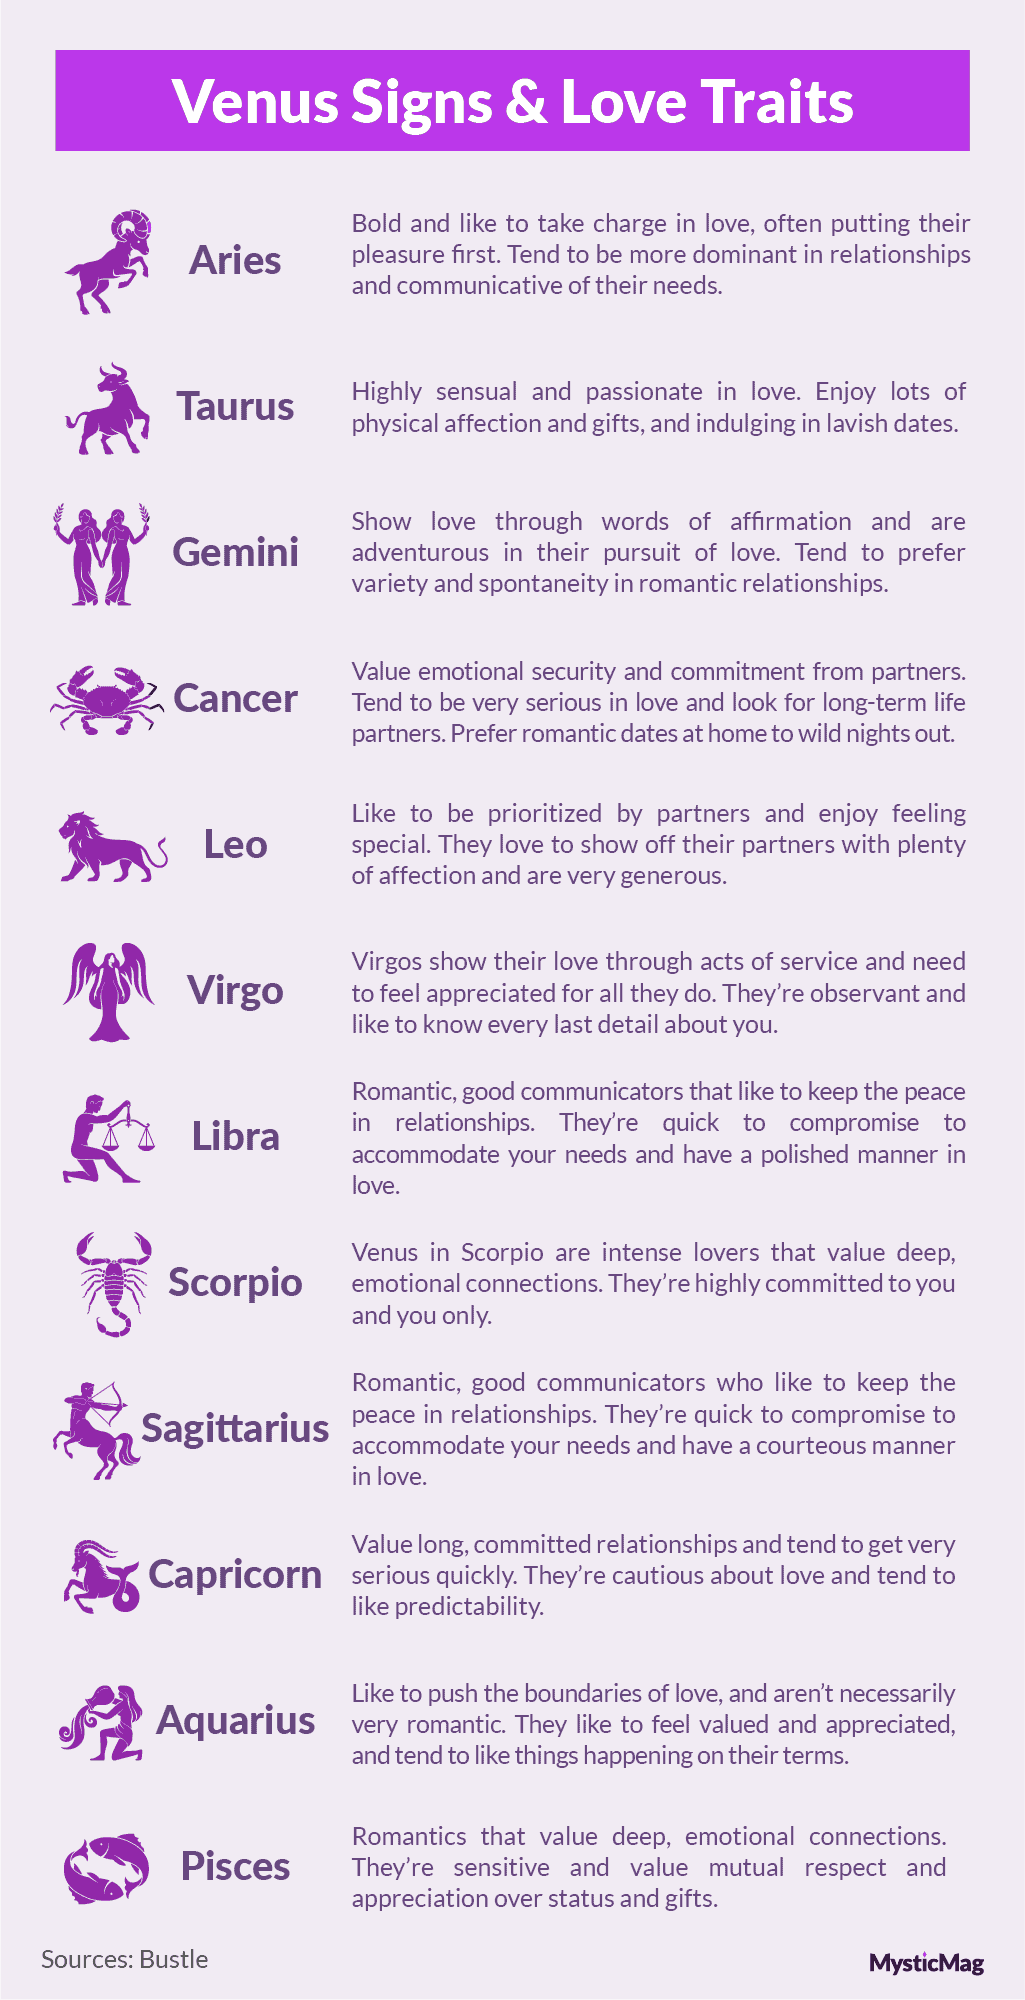 Venus signs and love traits